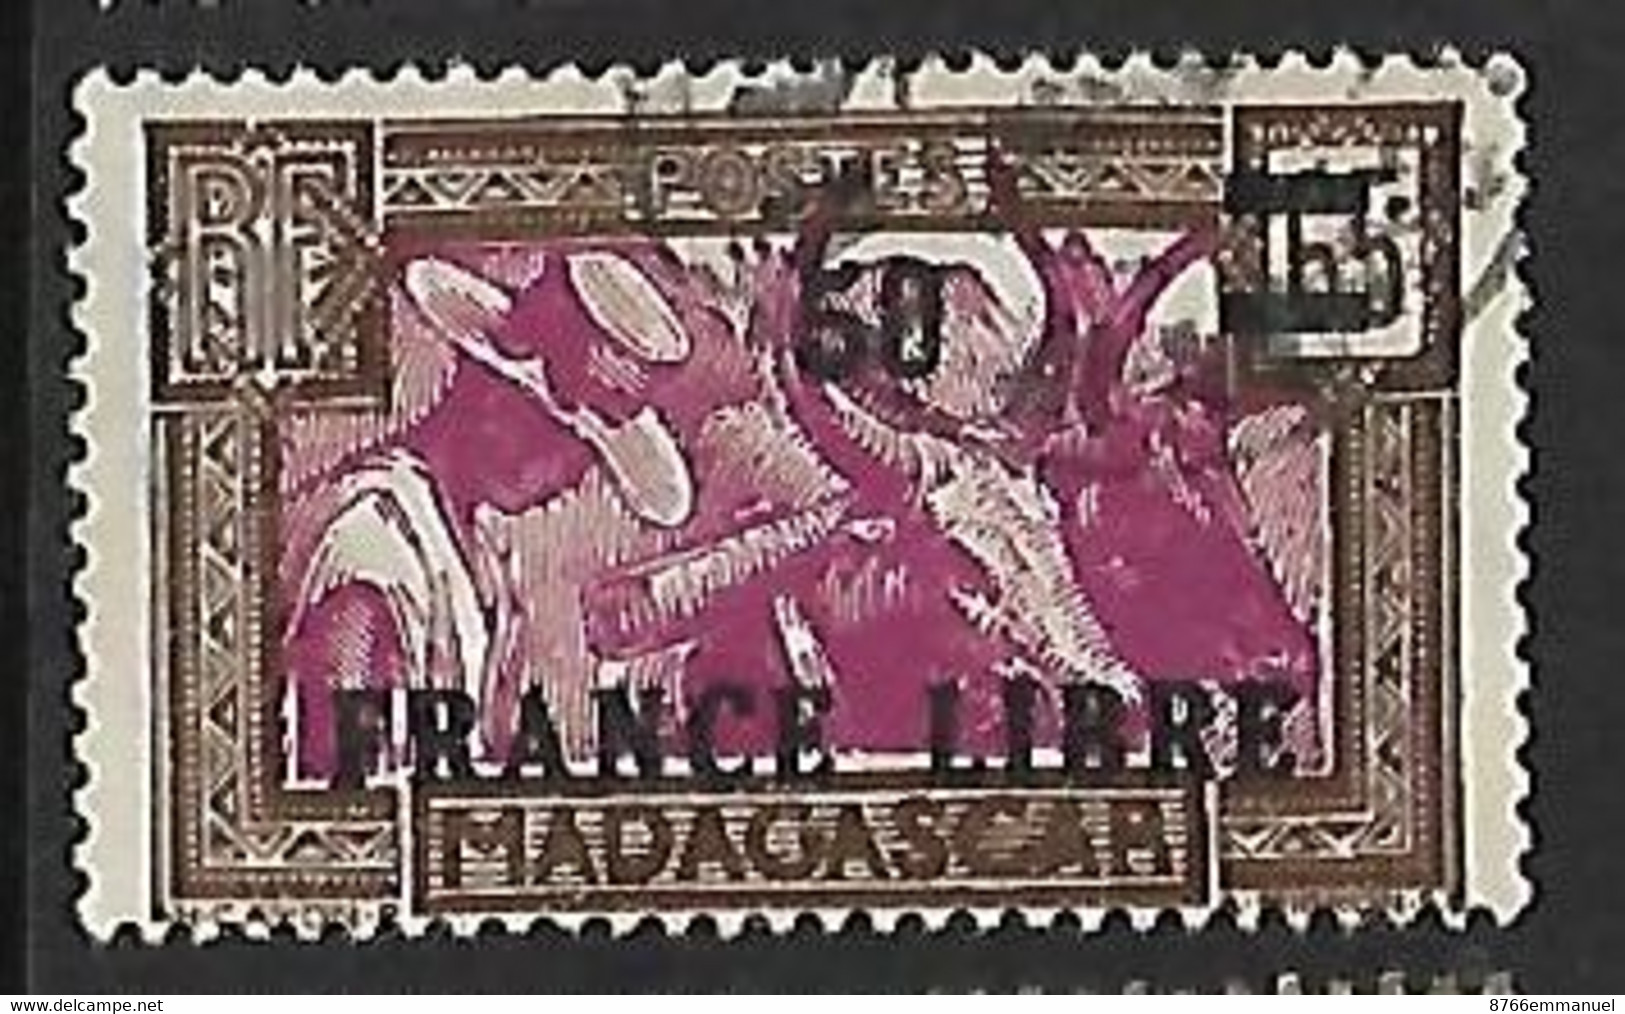 MADAGASCAR N°234  FRANCE LIBRE - Used Stamps